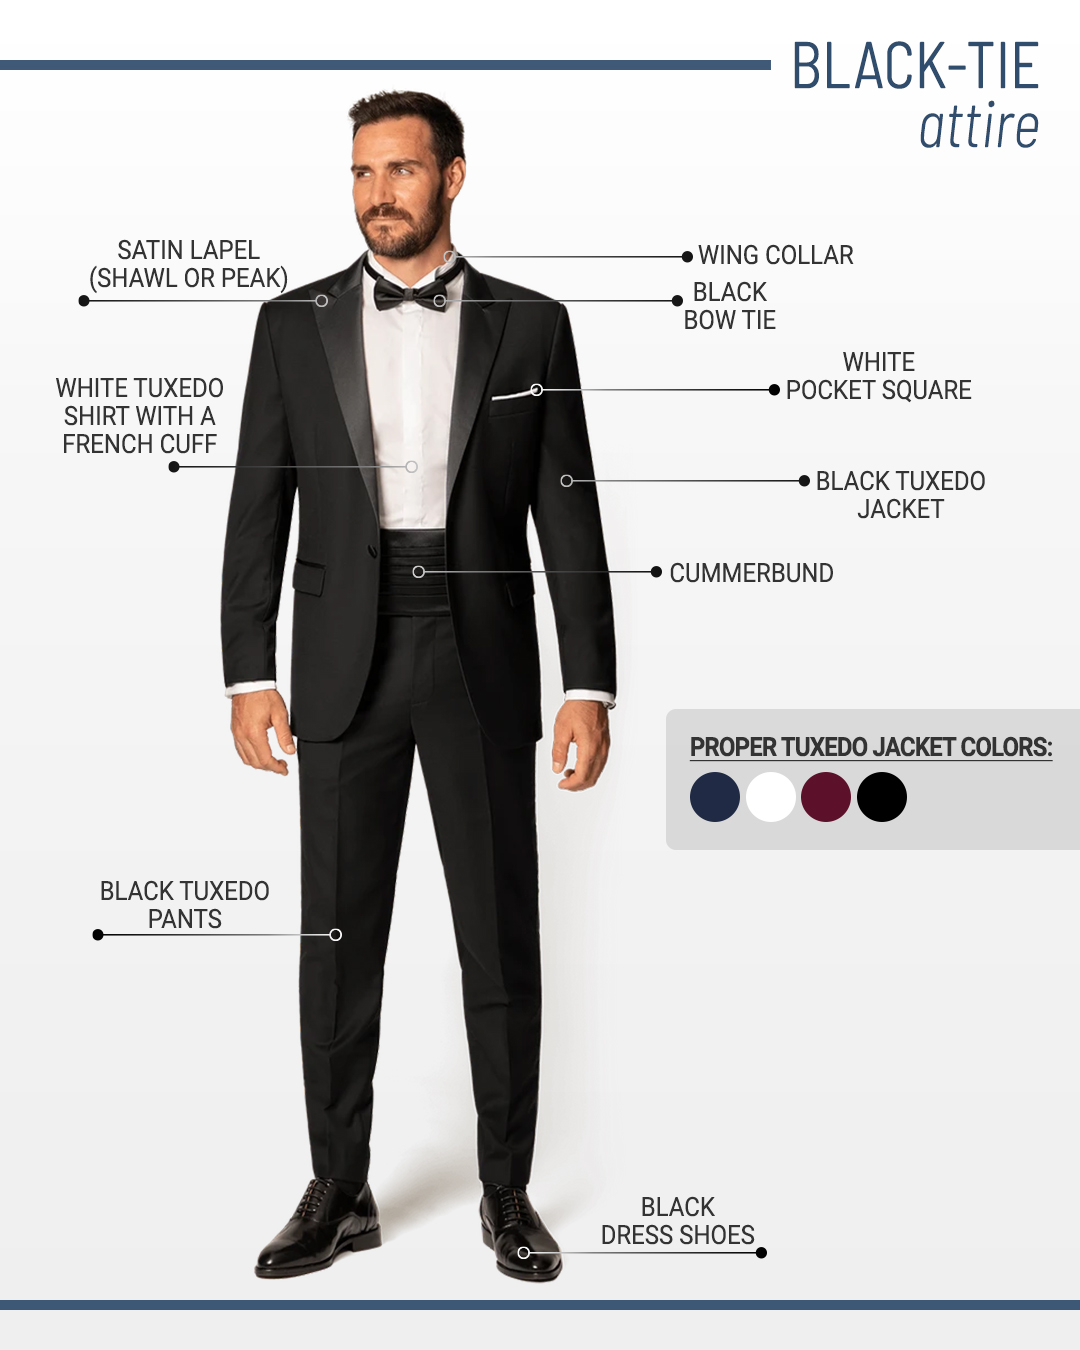 Black-tie dress code and attire for men